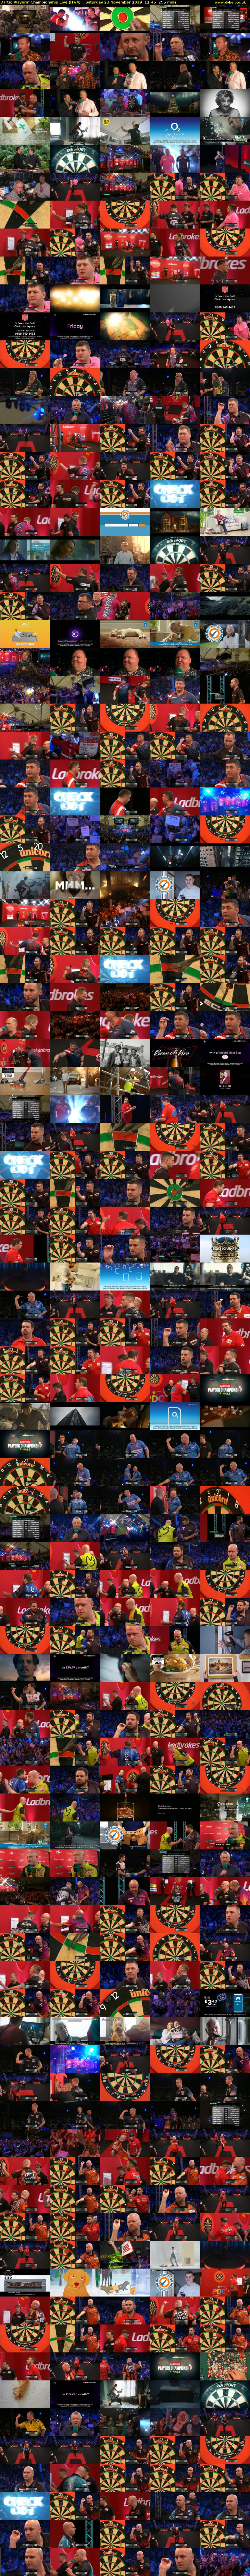 Darts: Players' Championship Live (ITV4) Saturday 23 November 2019 12:45 - 17:00